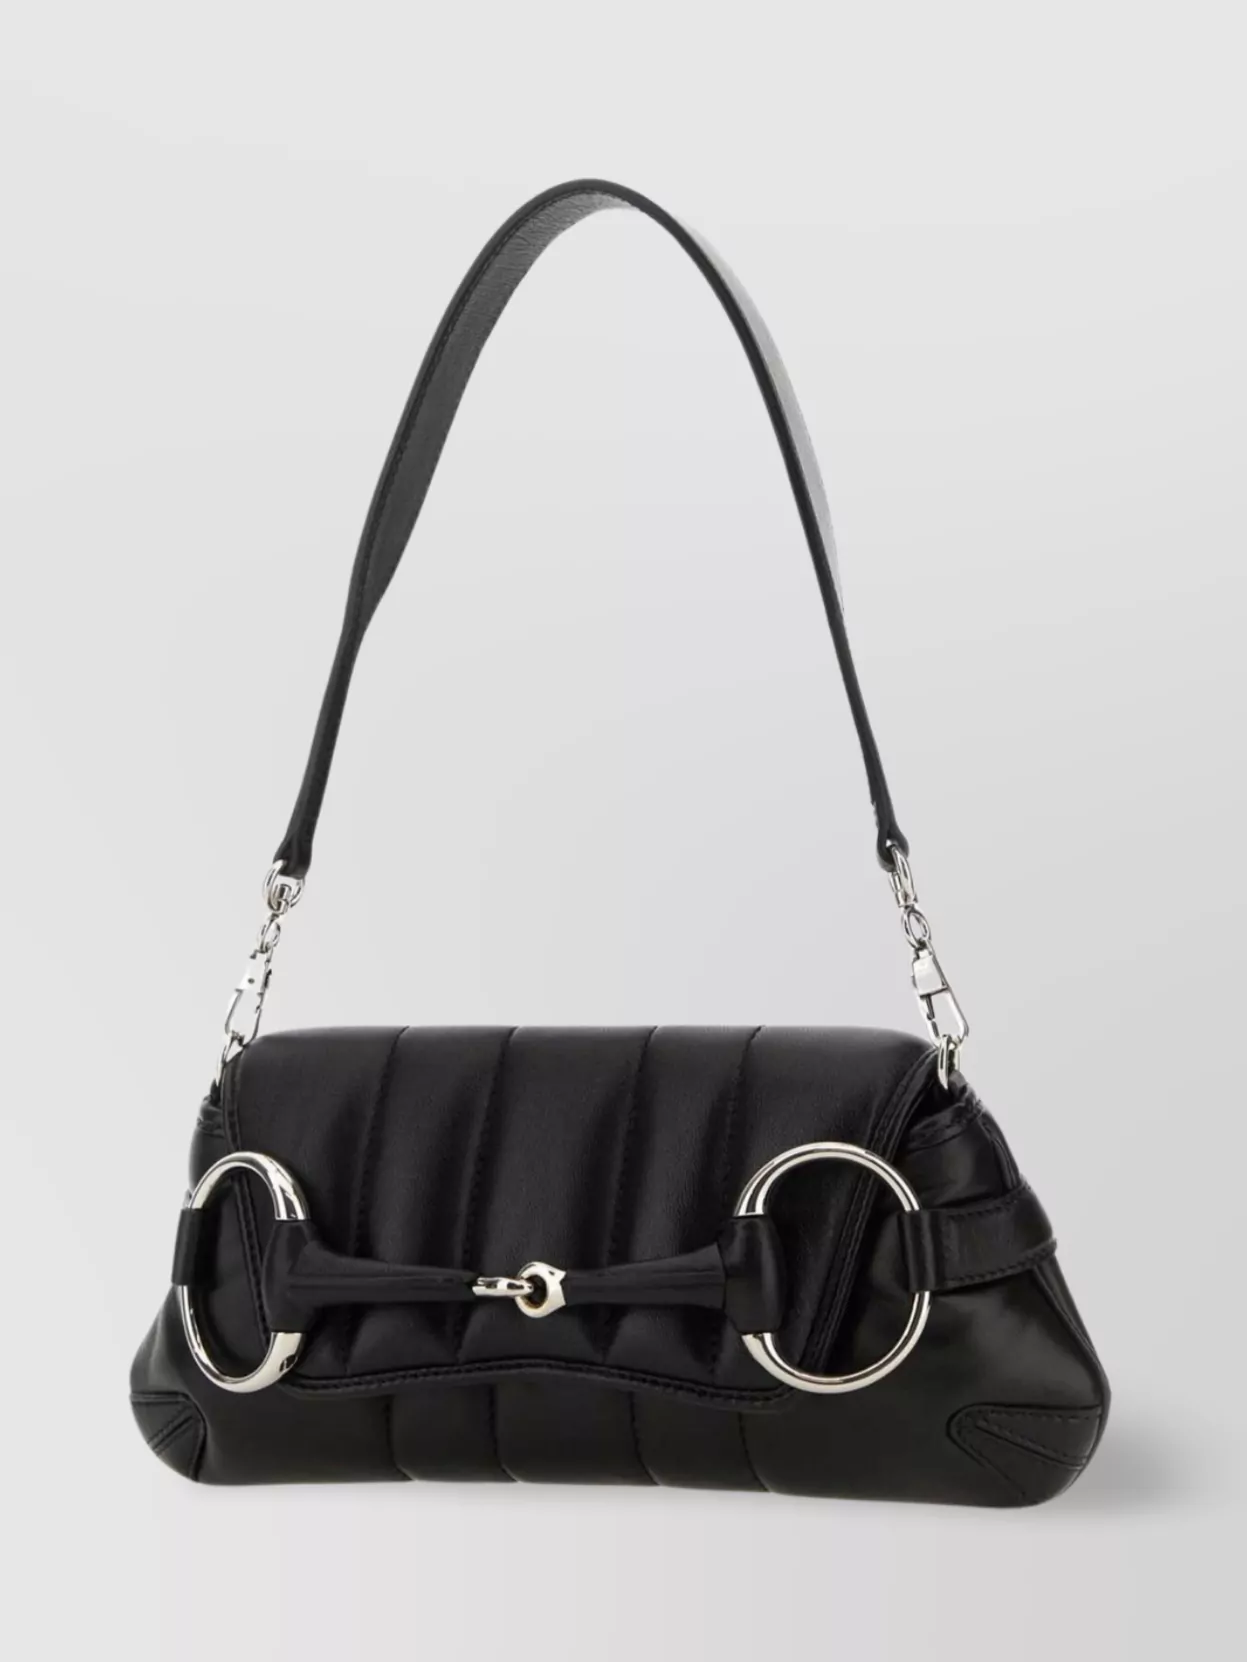 Gucci Small Horsebit Chain Leather Shoulder Bag